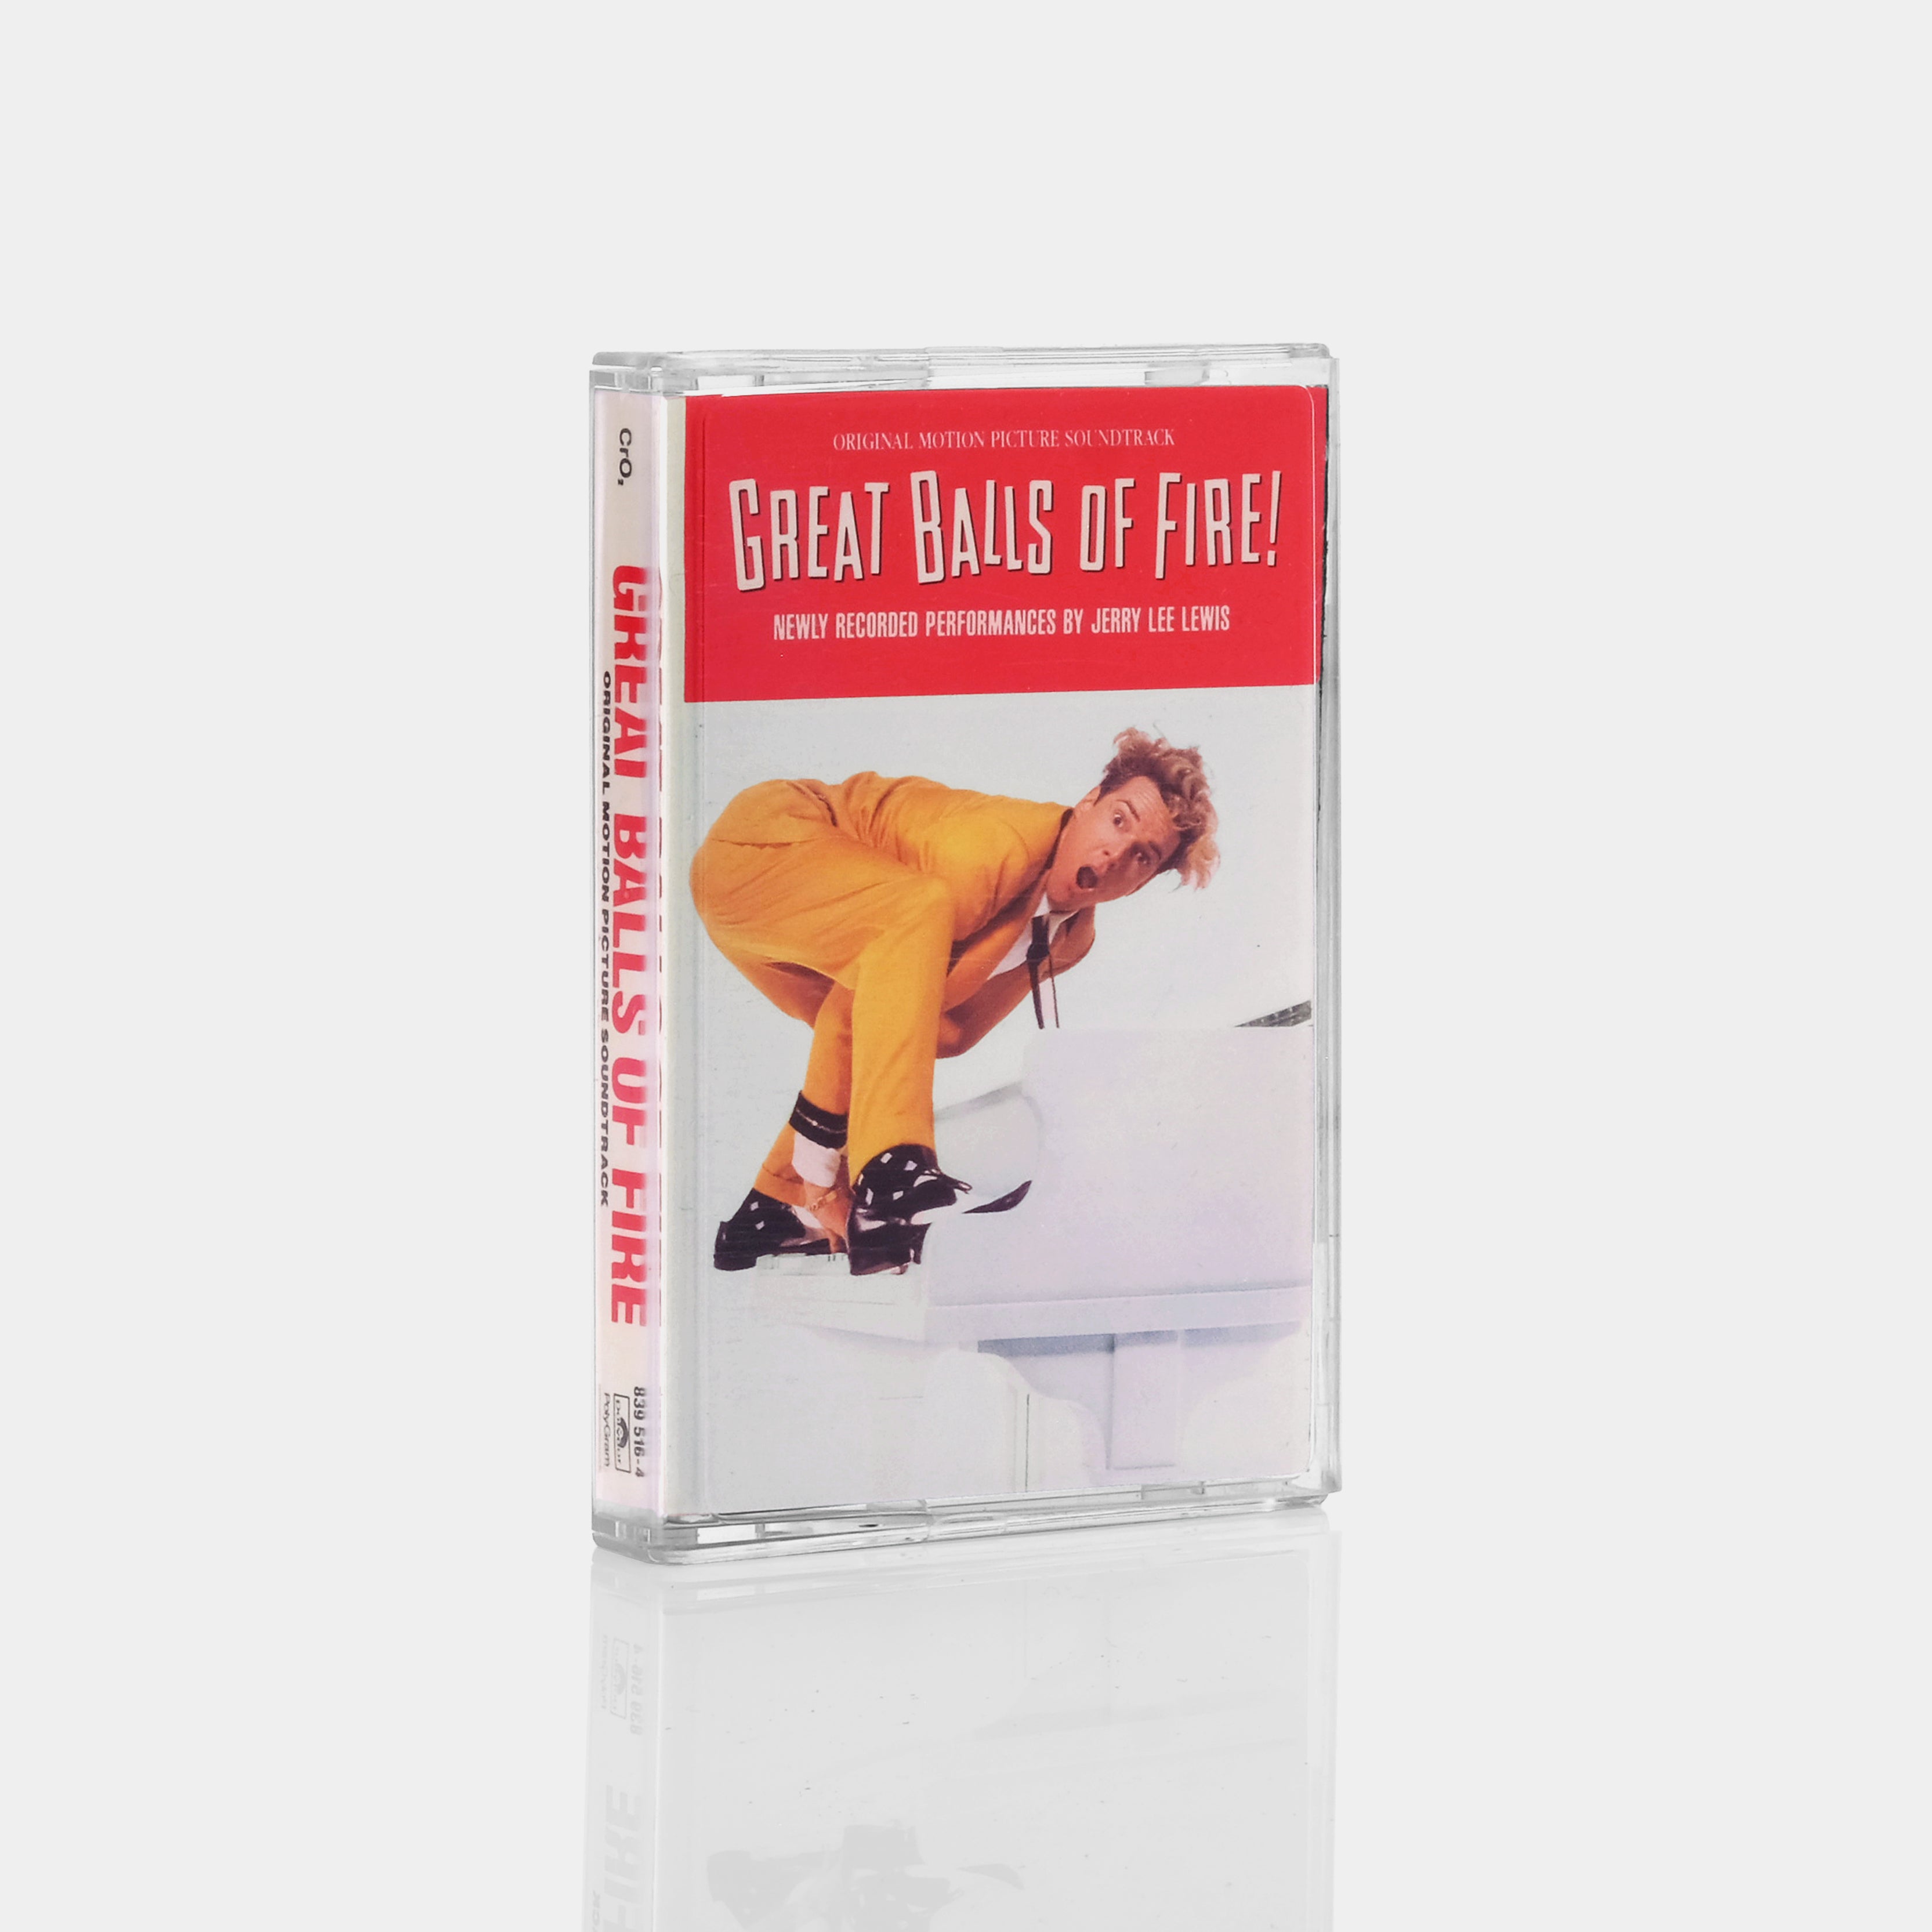 Great Balls Of Fire (Original Motion Picture Soundtrack) Cassette Tape